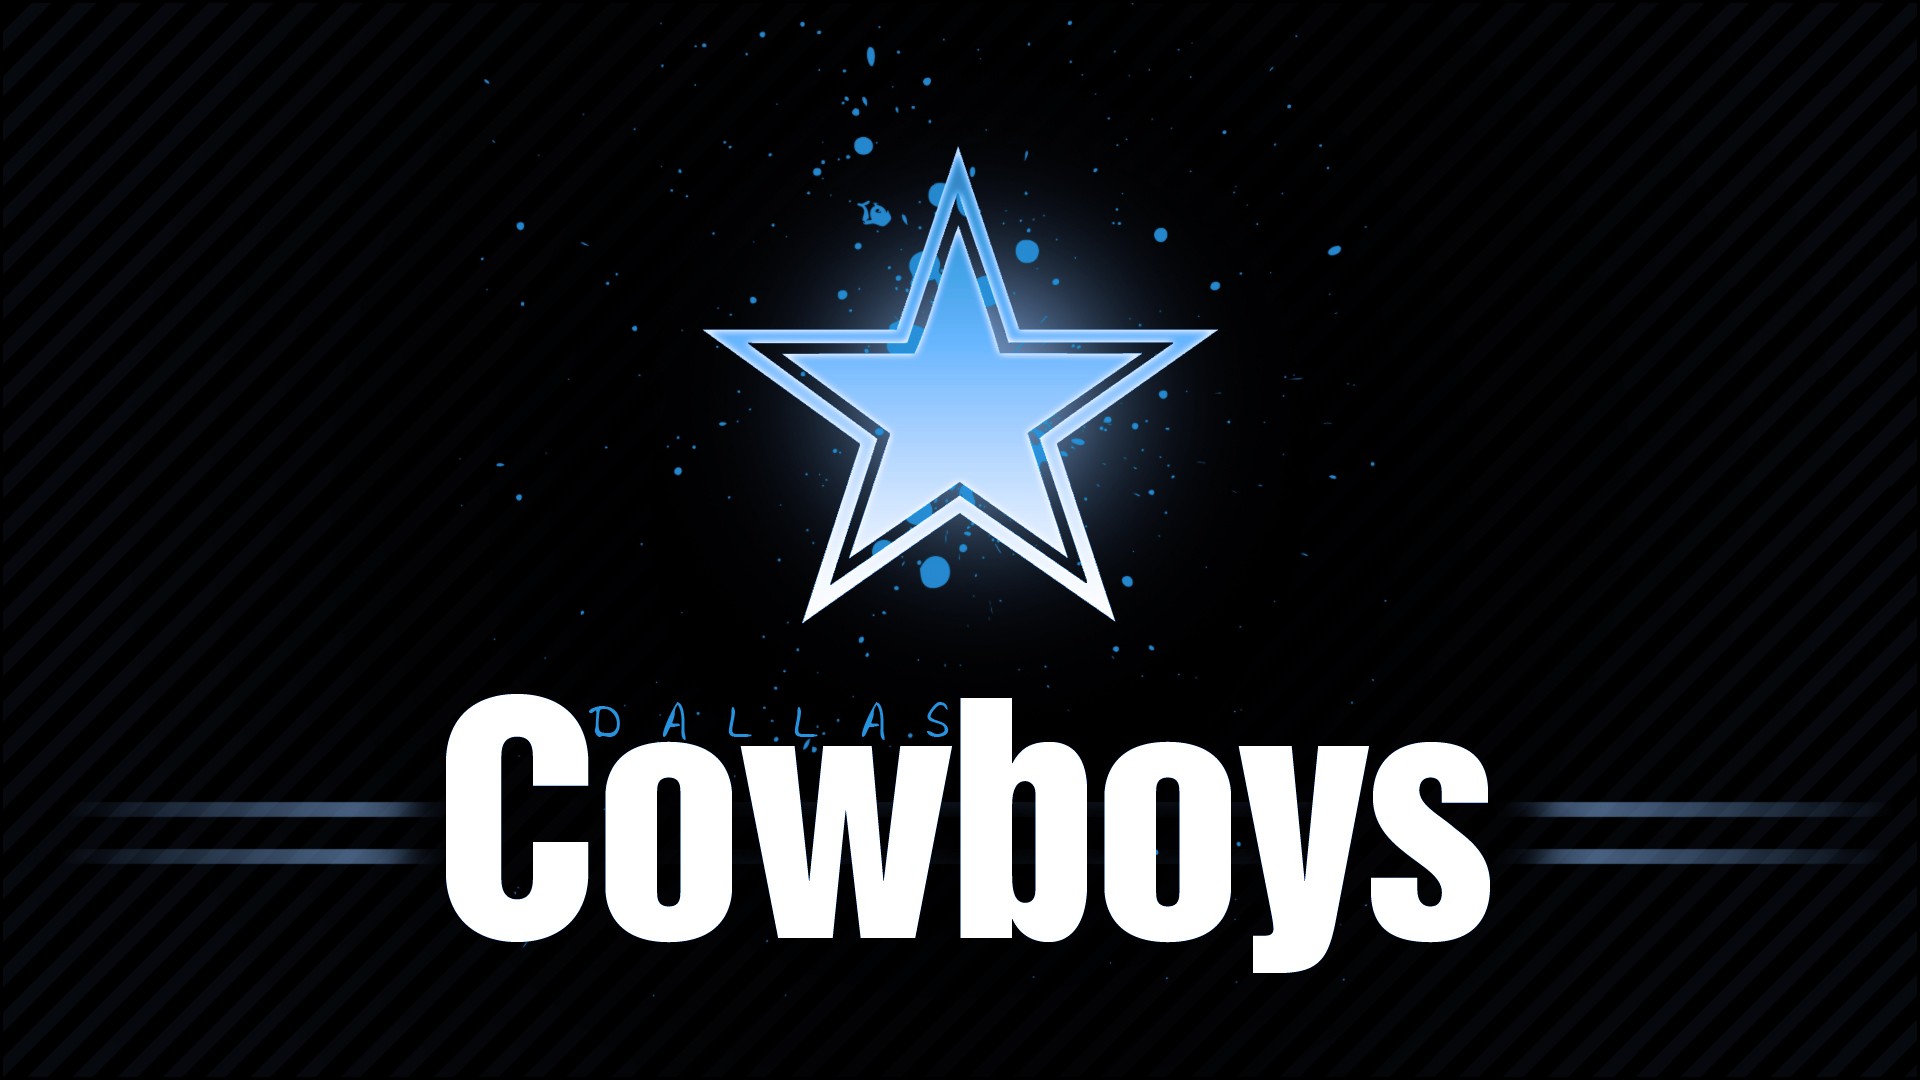 Dallas Cowboys wallpaper ·① Download free cool full HD ...